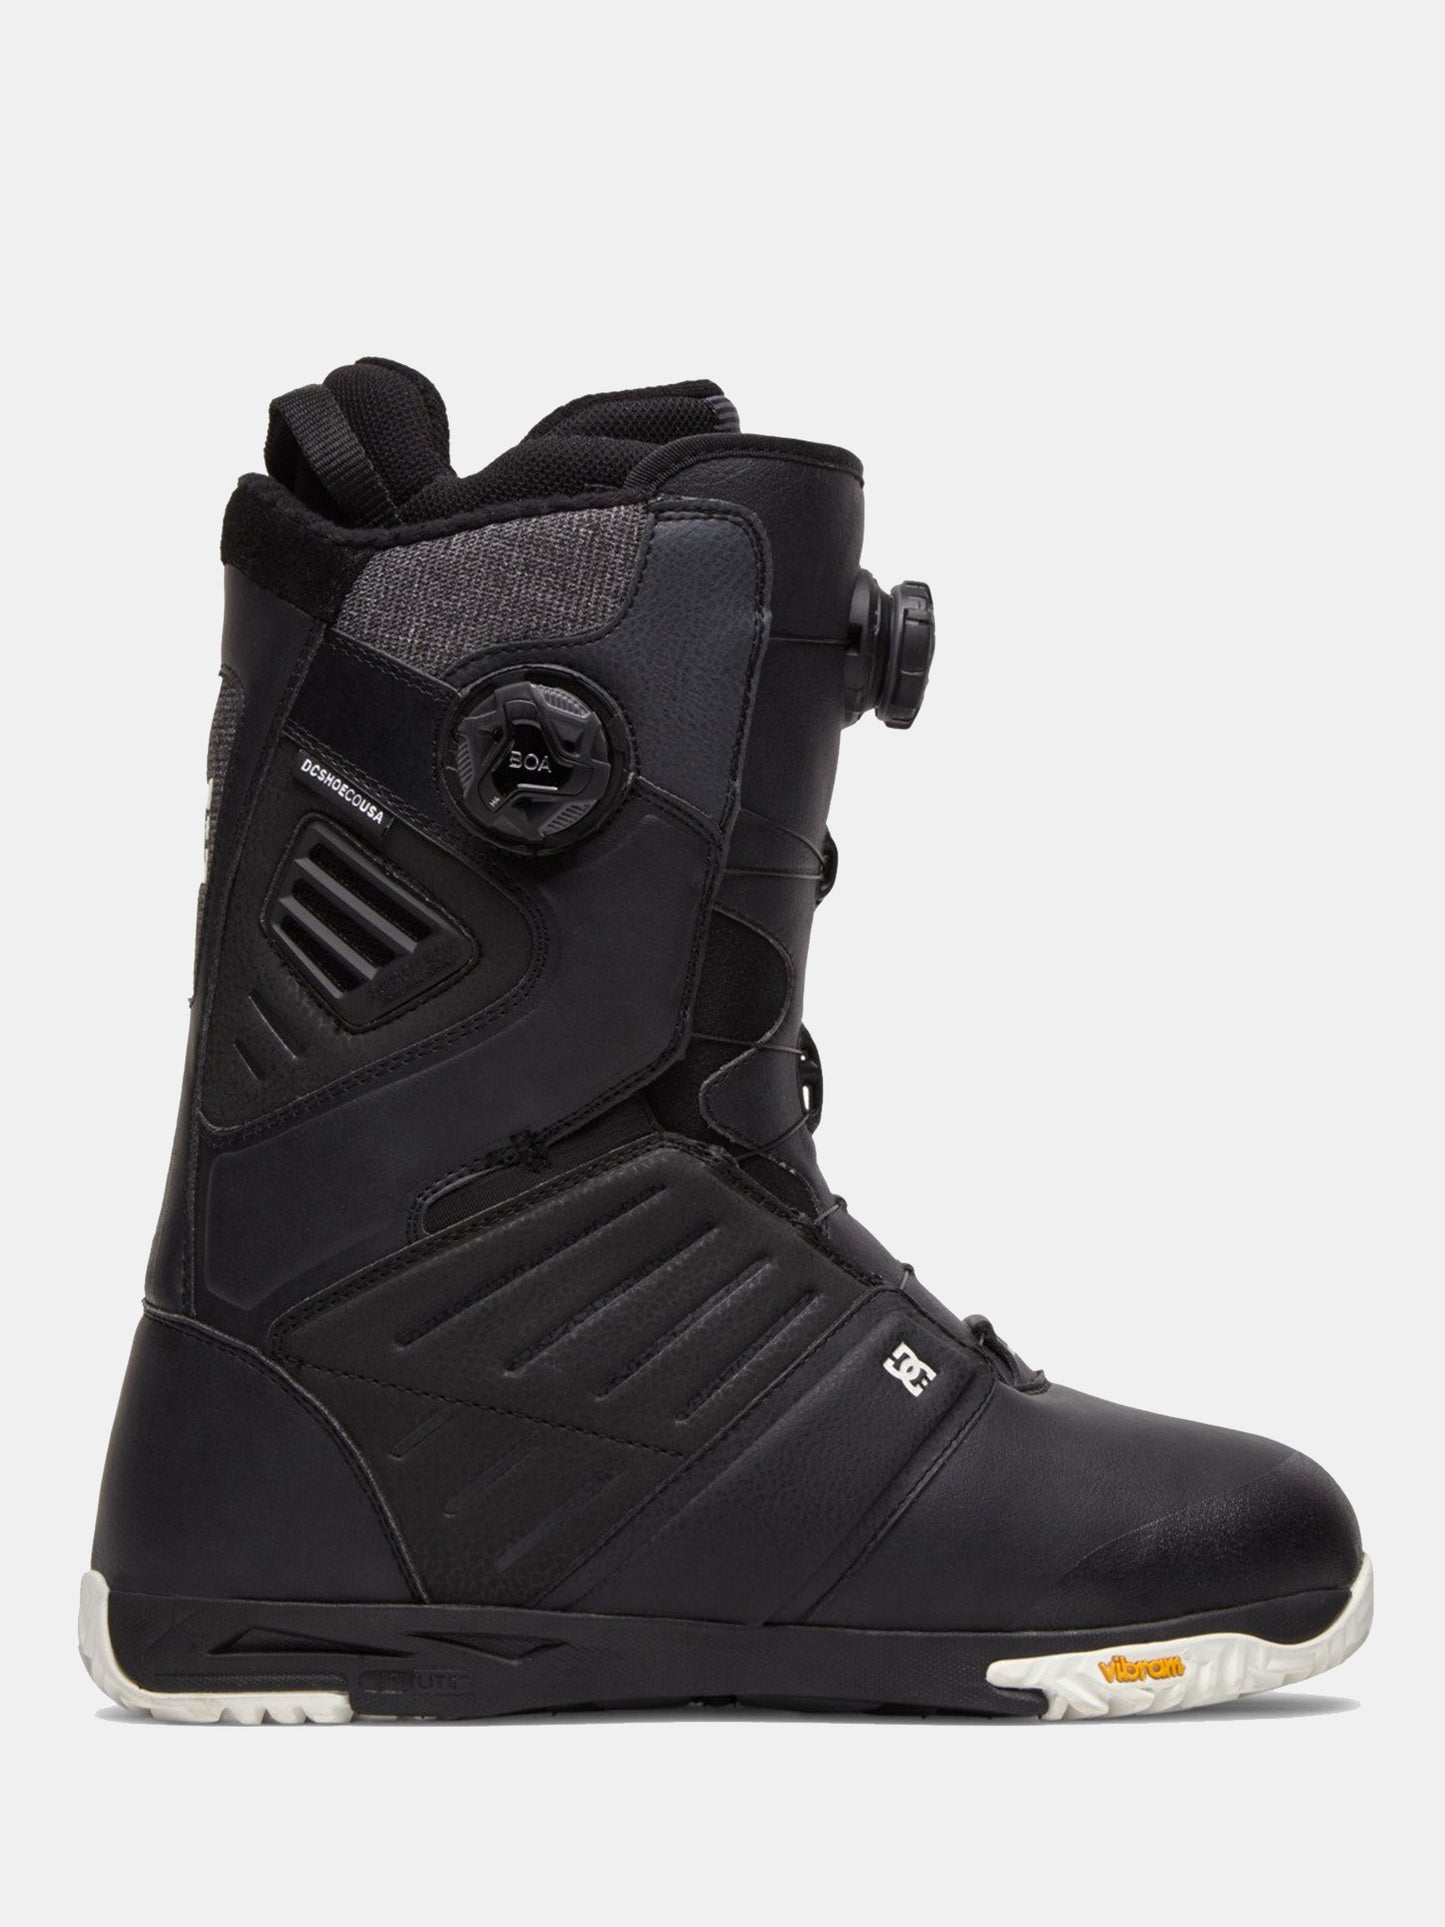 DC Judge Snowboard Boots 2021